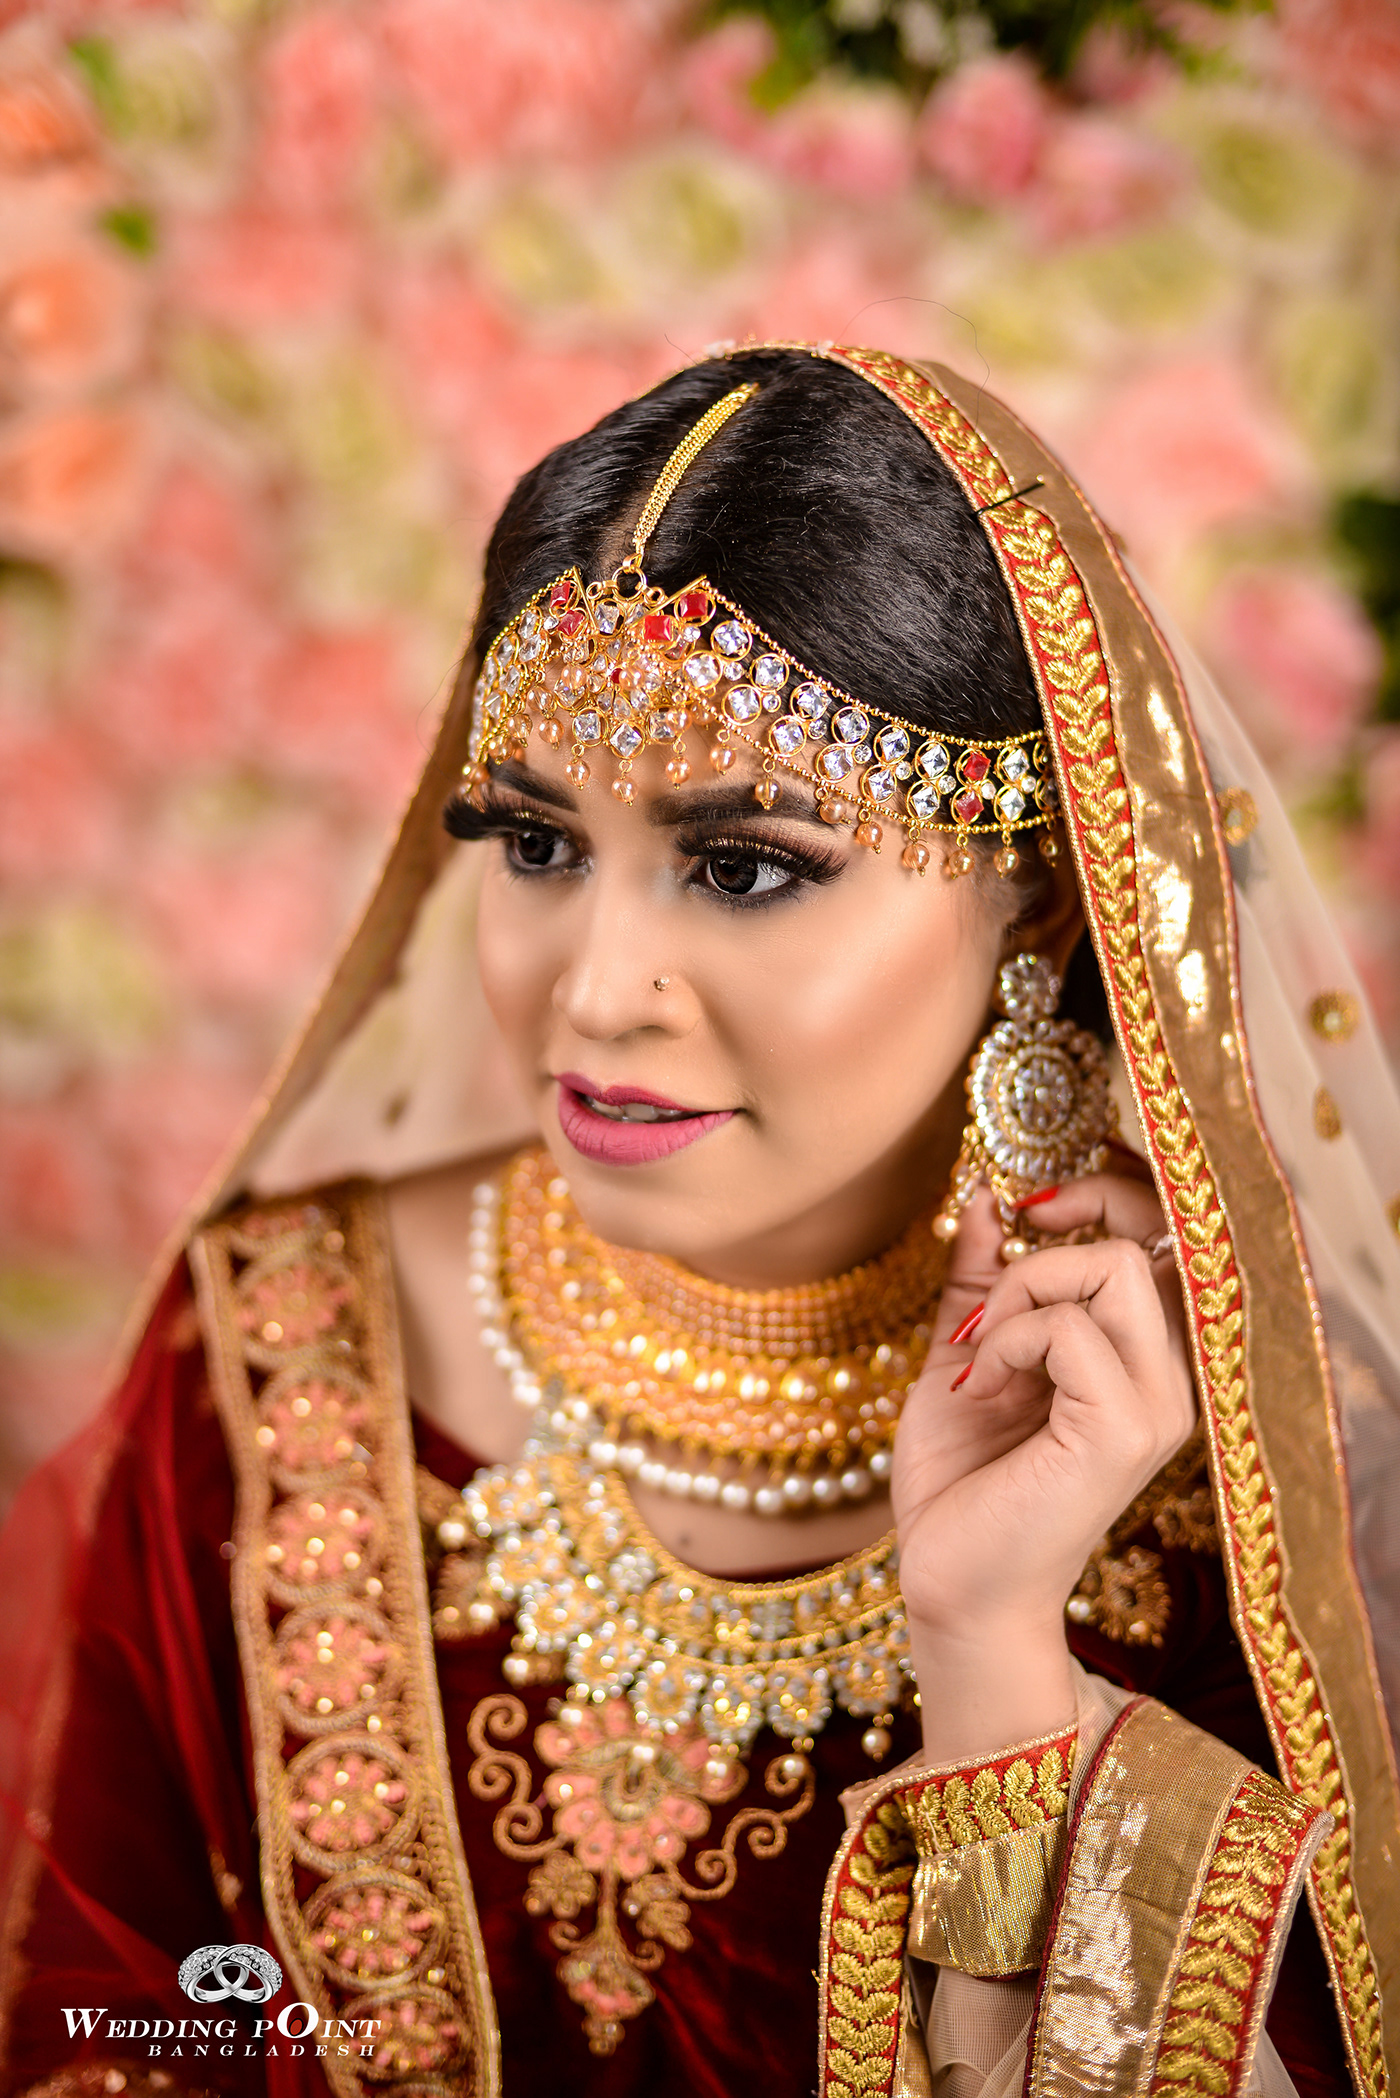 beauty makeup Photography  photoshoot portrait retouch Wedding Photography Weddings